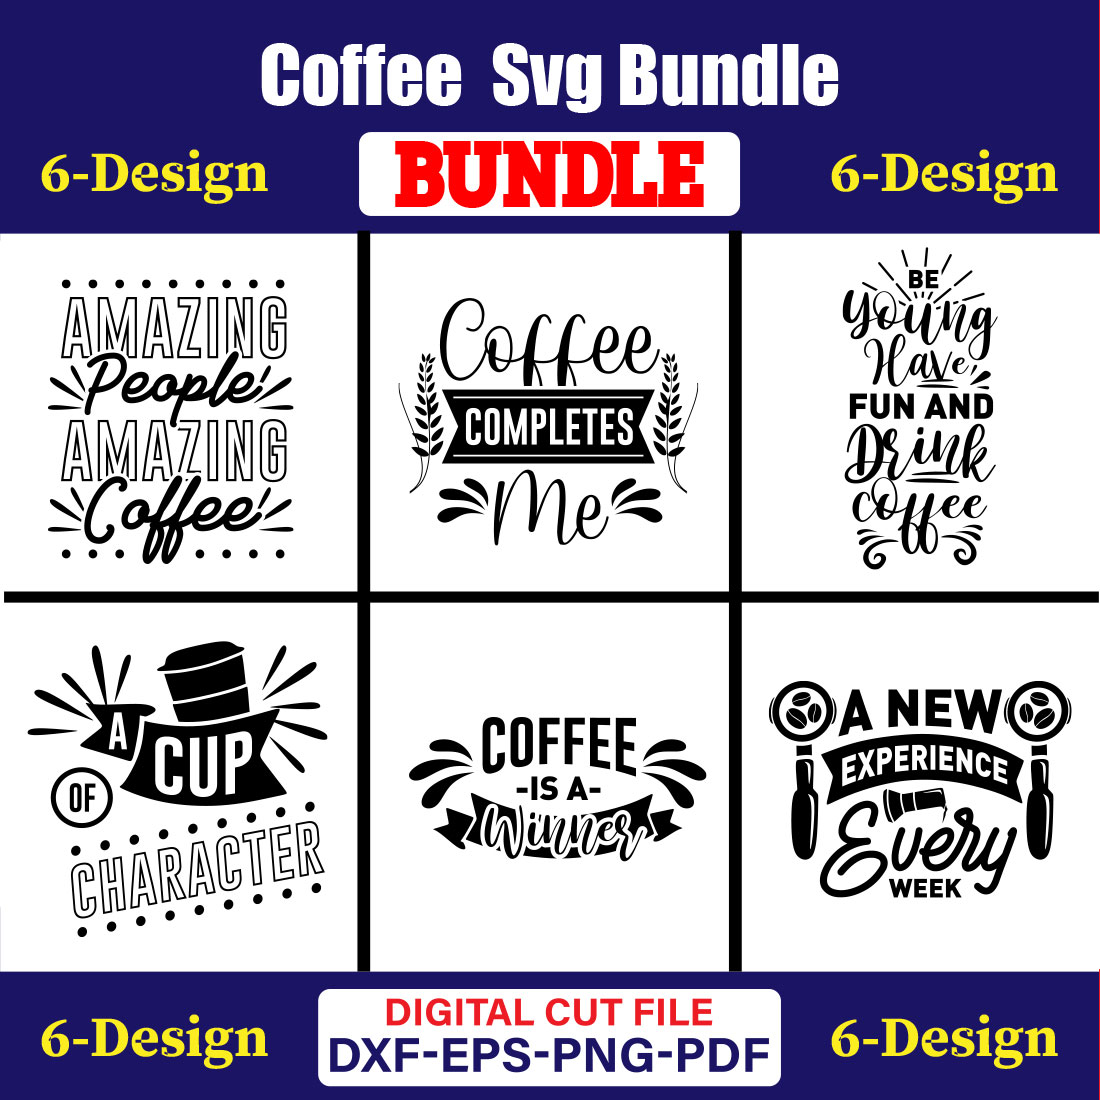 Coffee T-shirt Design Bundle Vol-10 cover image.